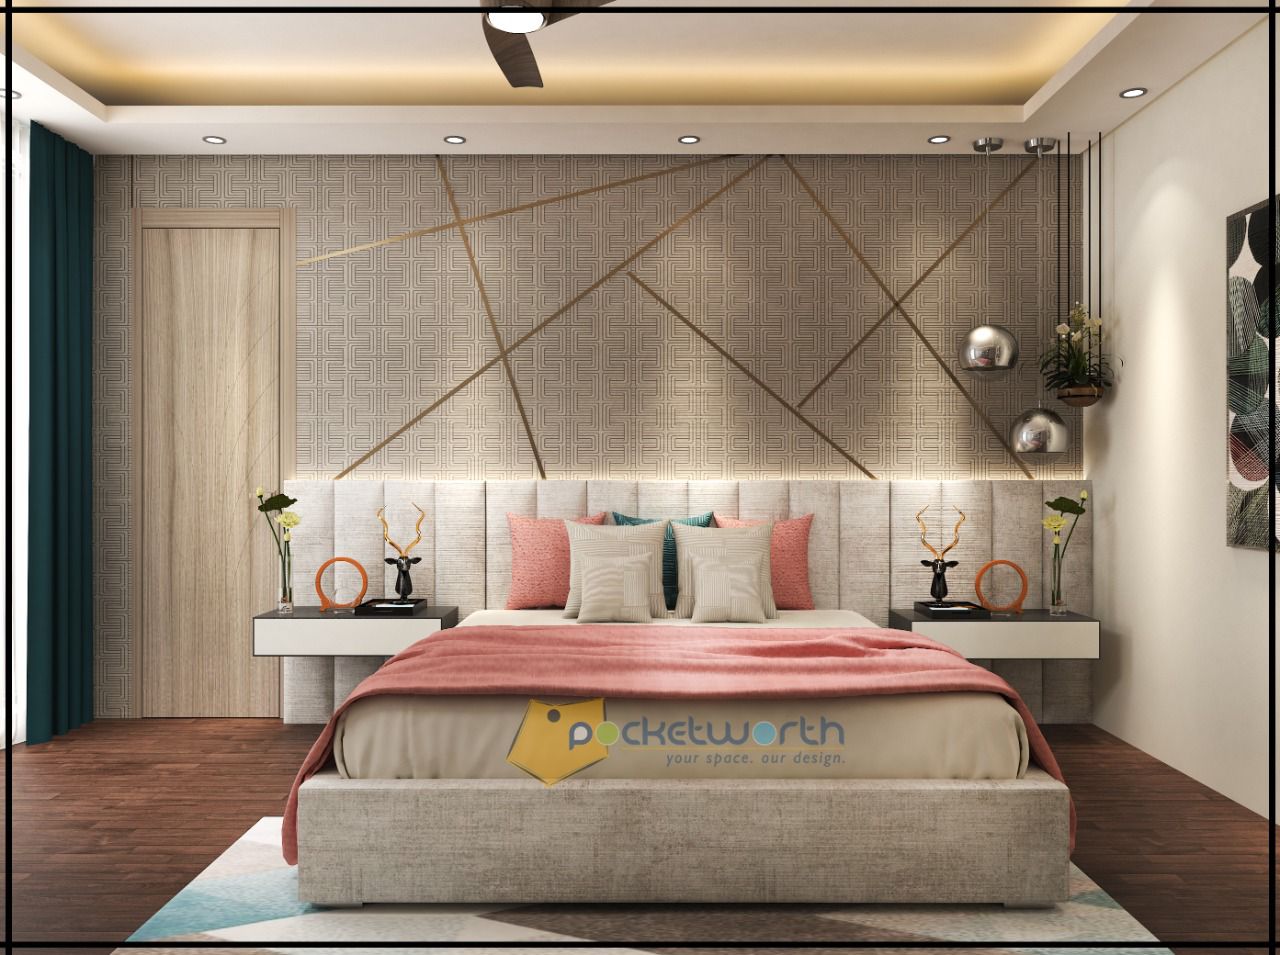 pocketworth-bedroom-design